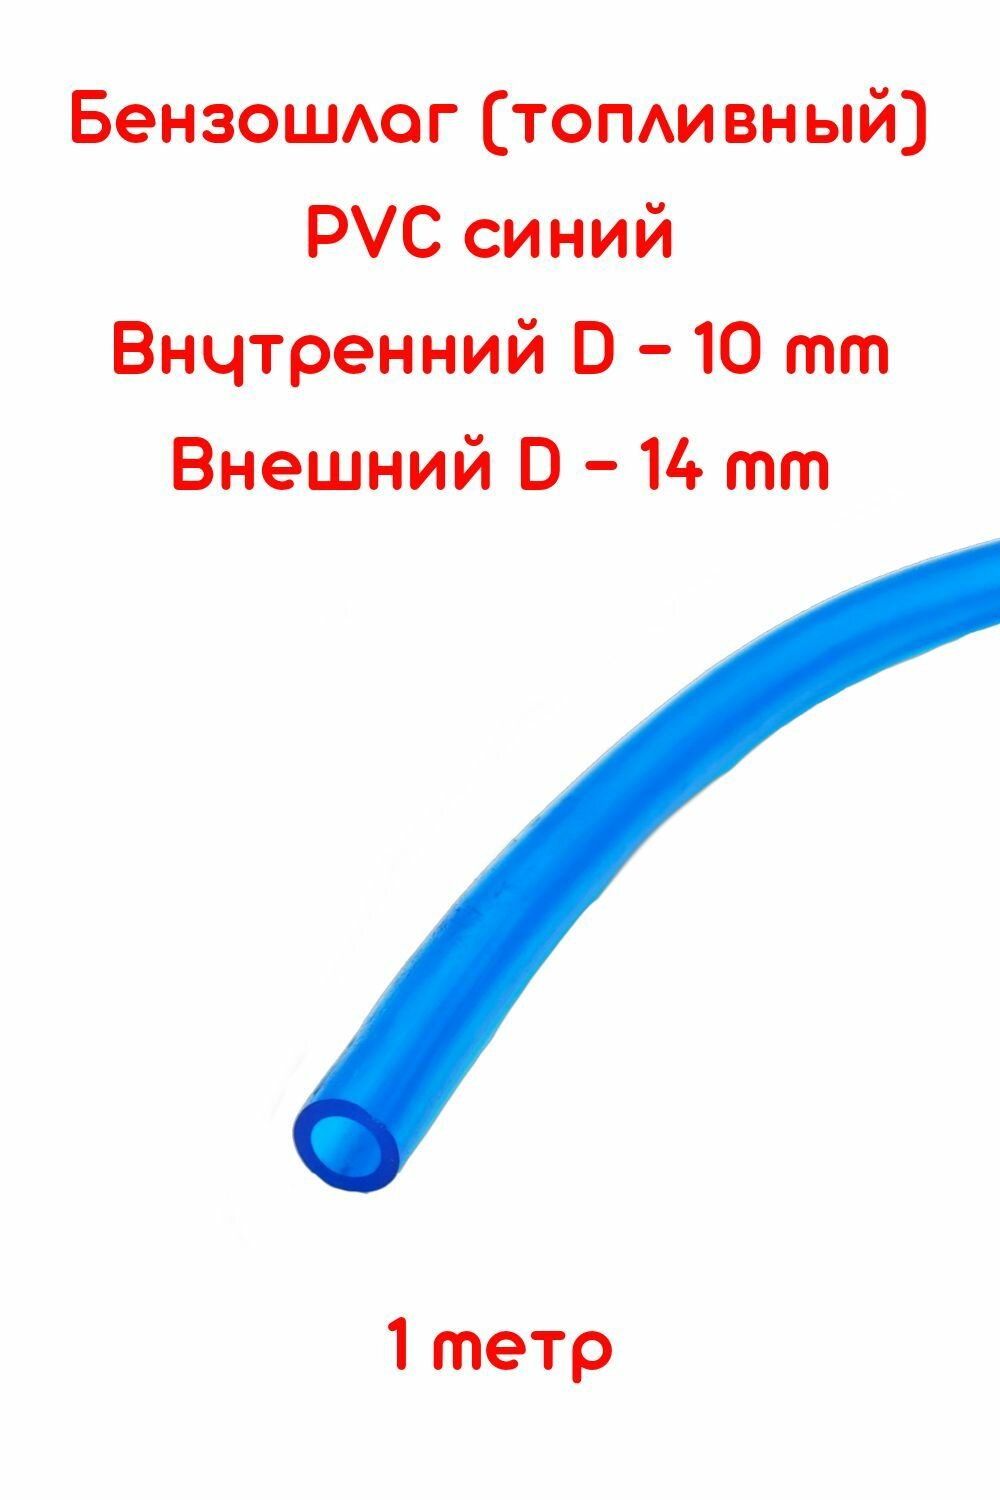 Бензошланг синий / топливный шланг 10 мм PVC (ПВХ) маслобензостойкий 1 метр / бензошланг для мотоцикла/